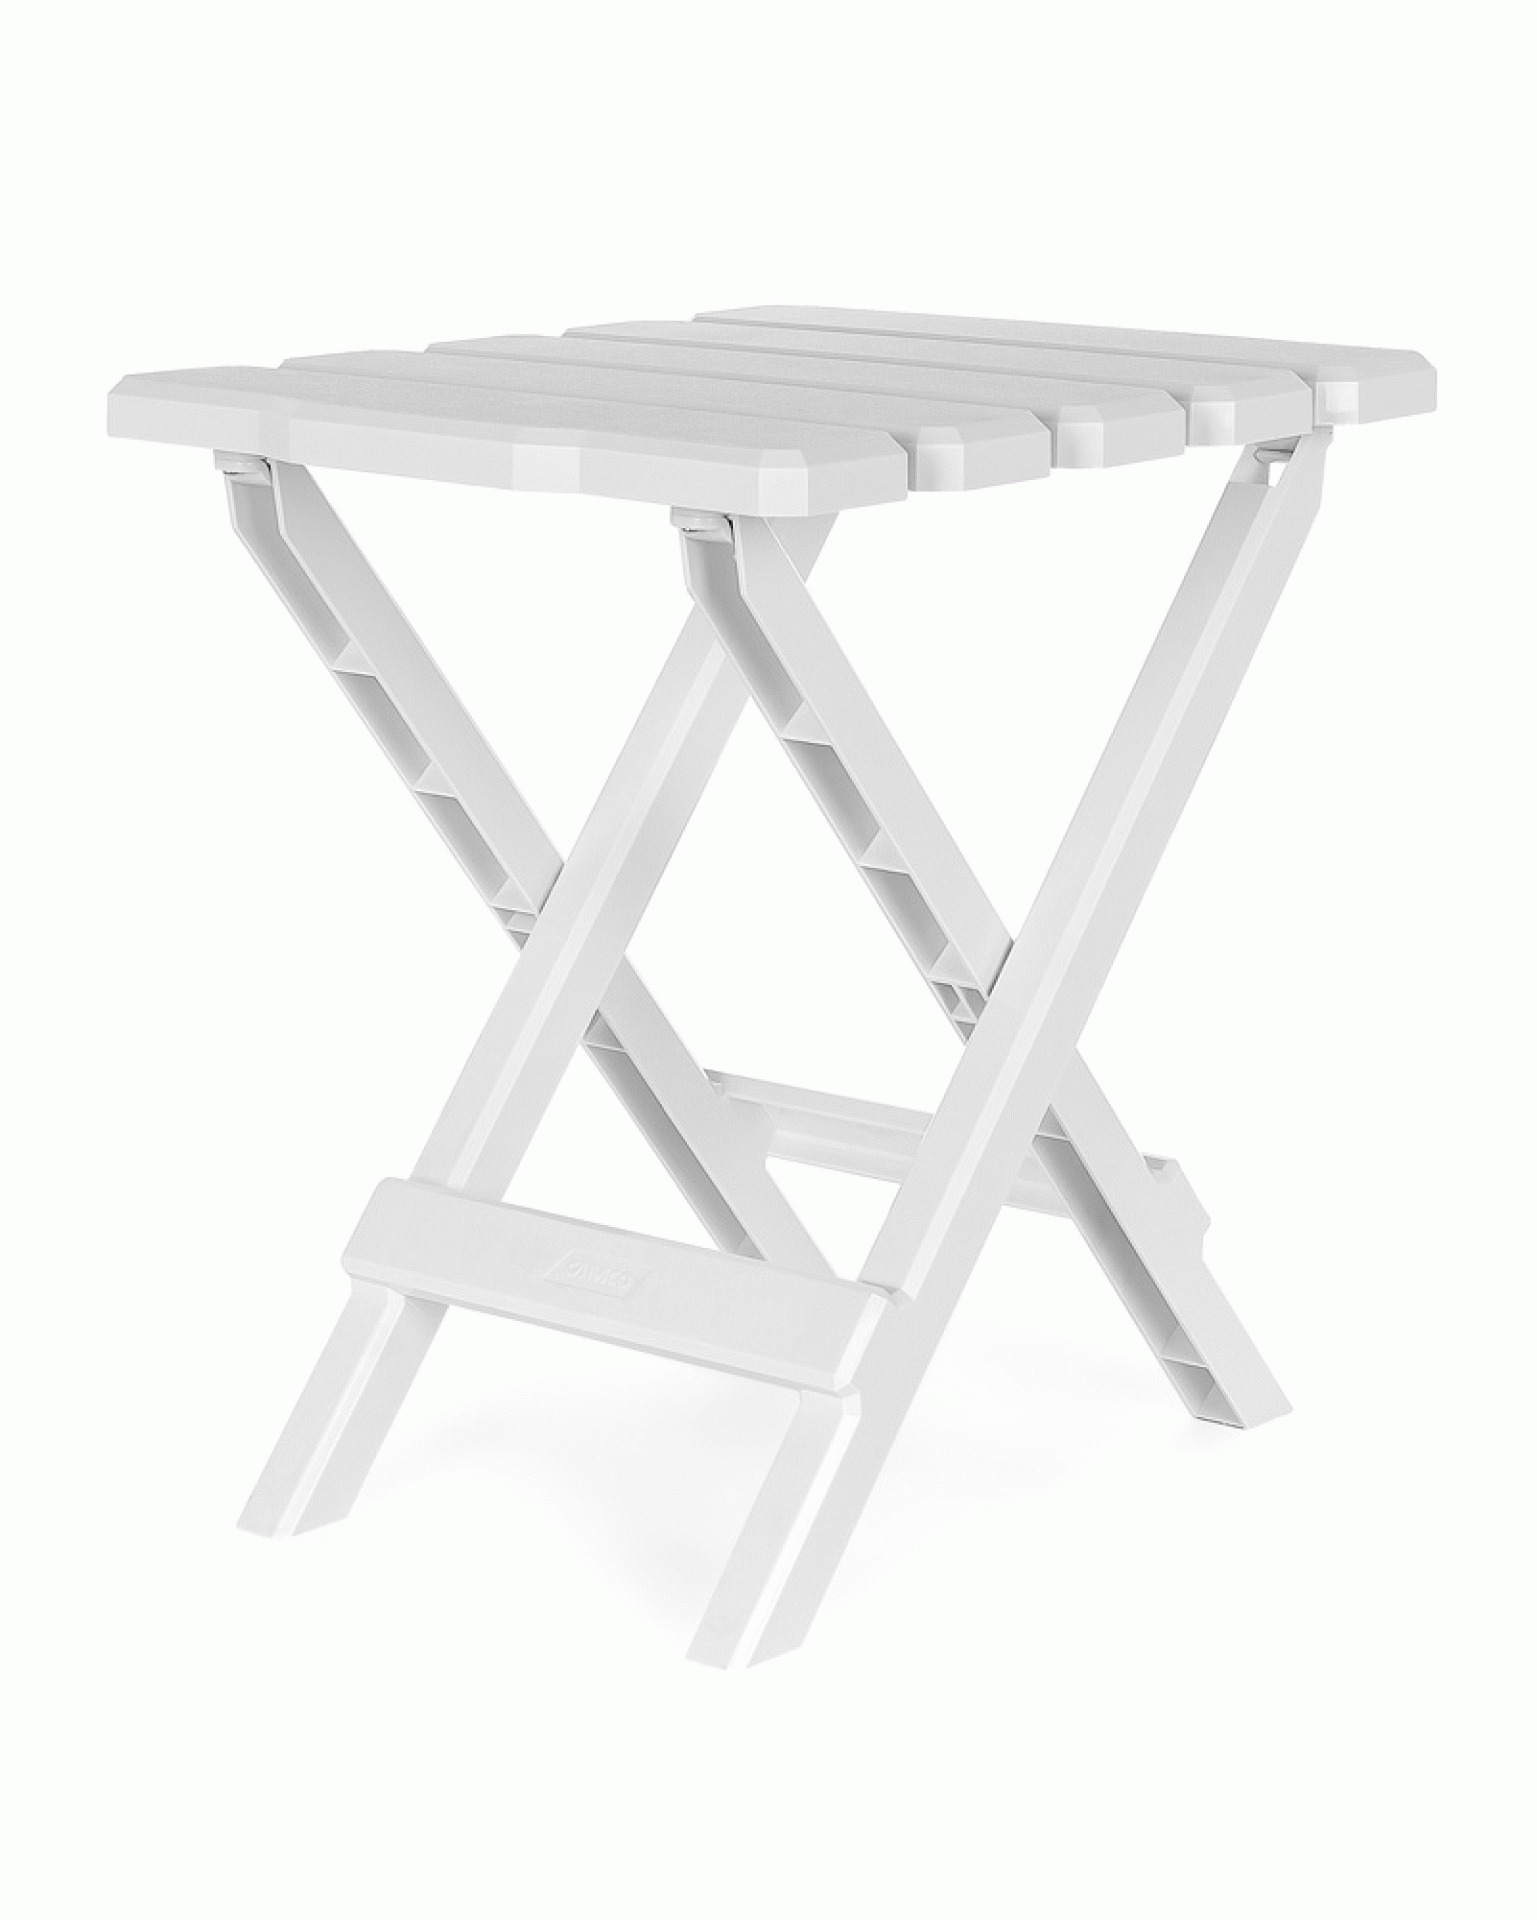 CAMCO MFG INC | 51685 | Small Adirondack Style Folding Table - White